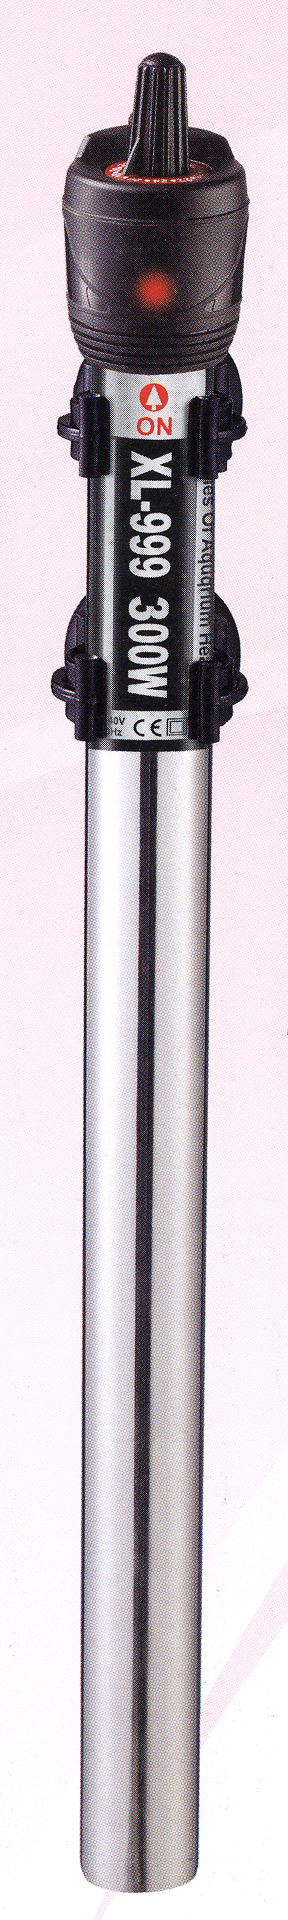 XILONG терморегулятор 300Вт металлический XL-999